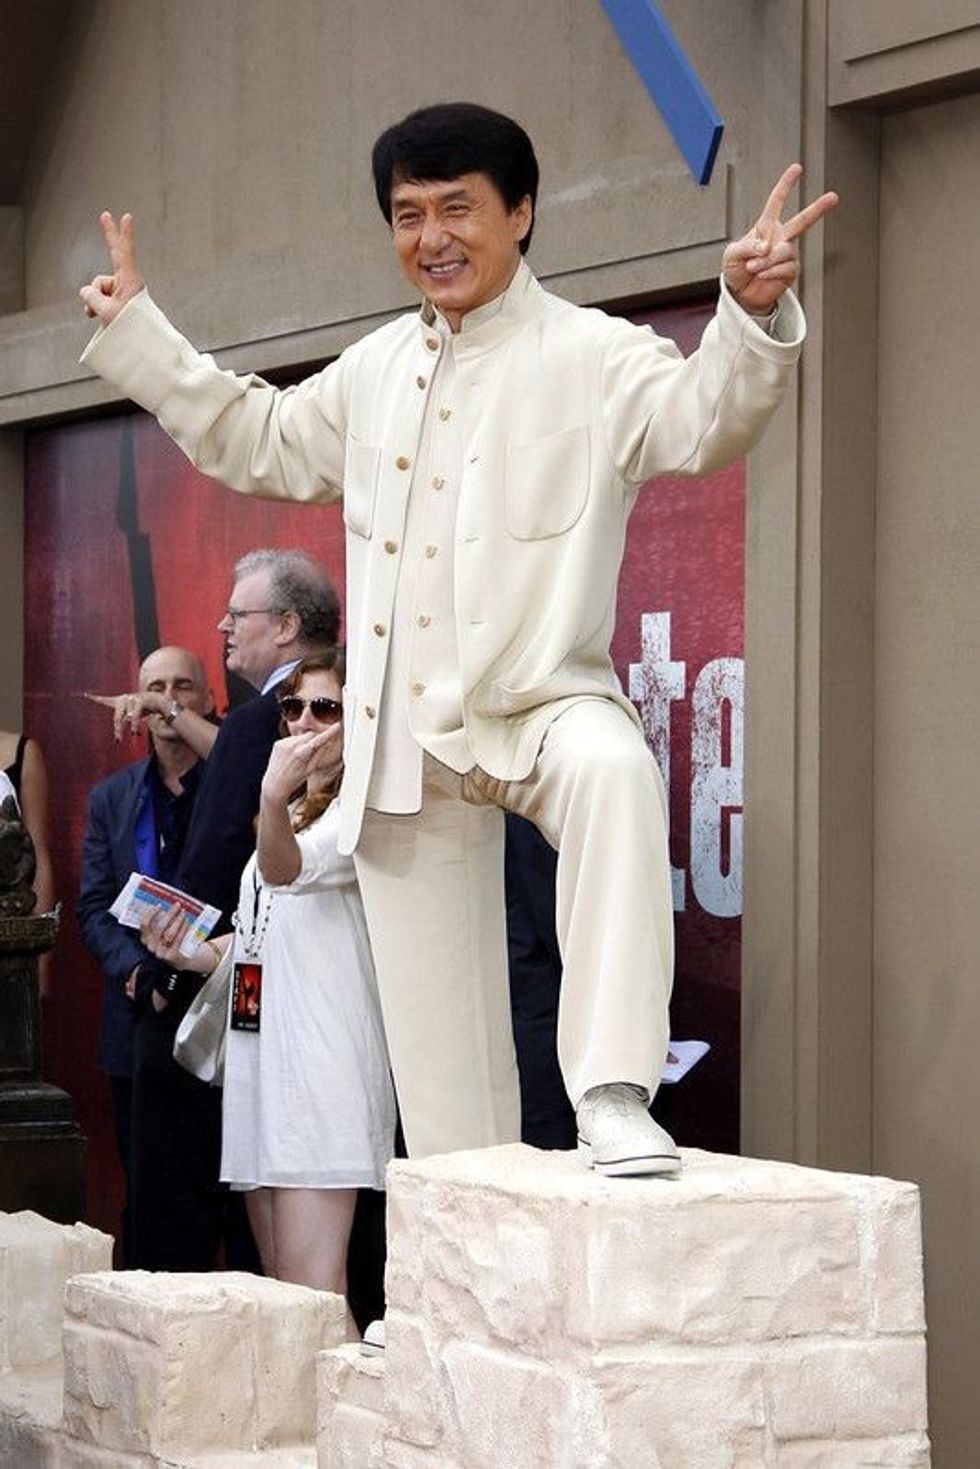 Jackie Chan at the Los Angeles premiere of 'The Karate Kid'